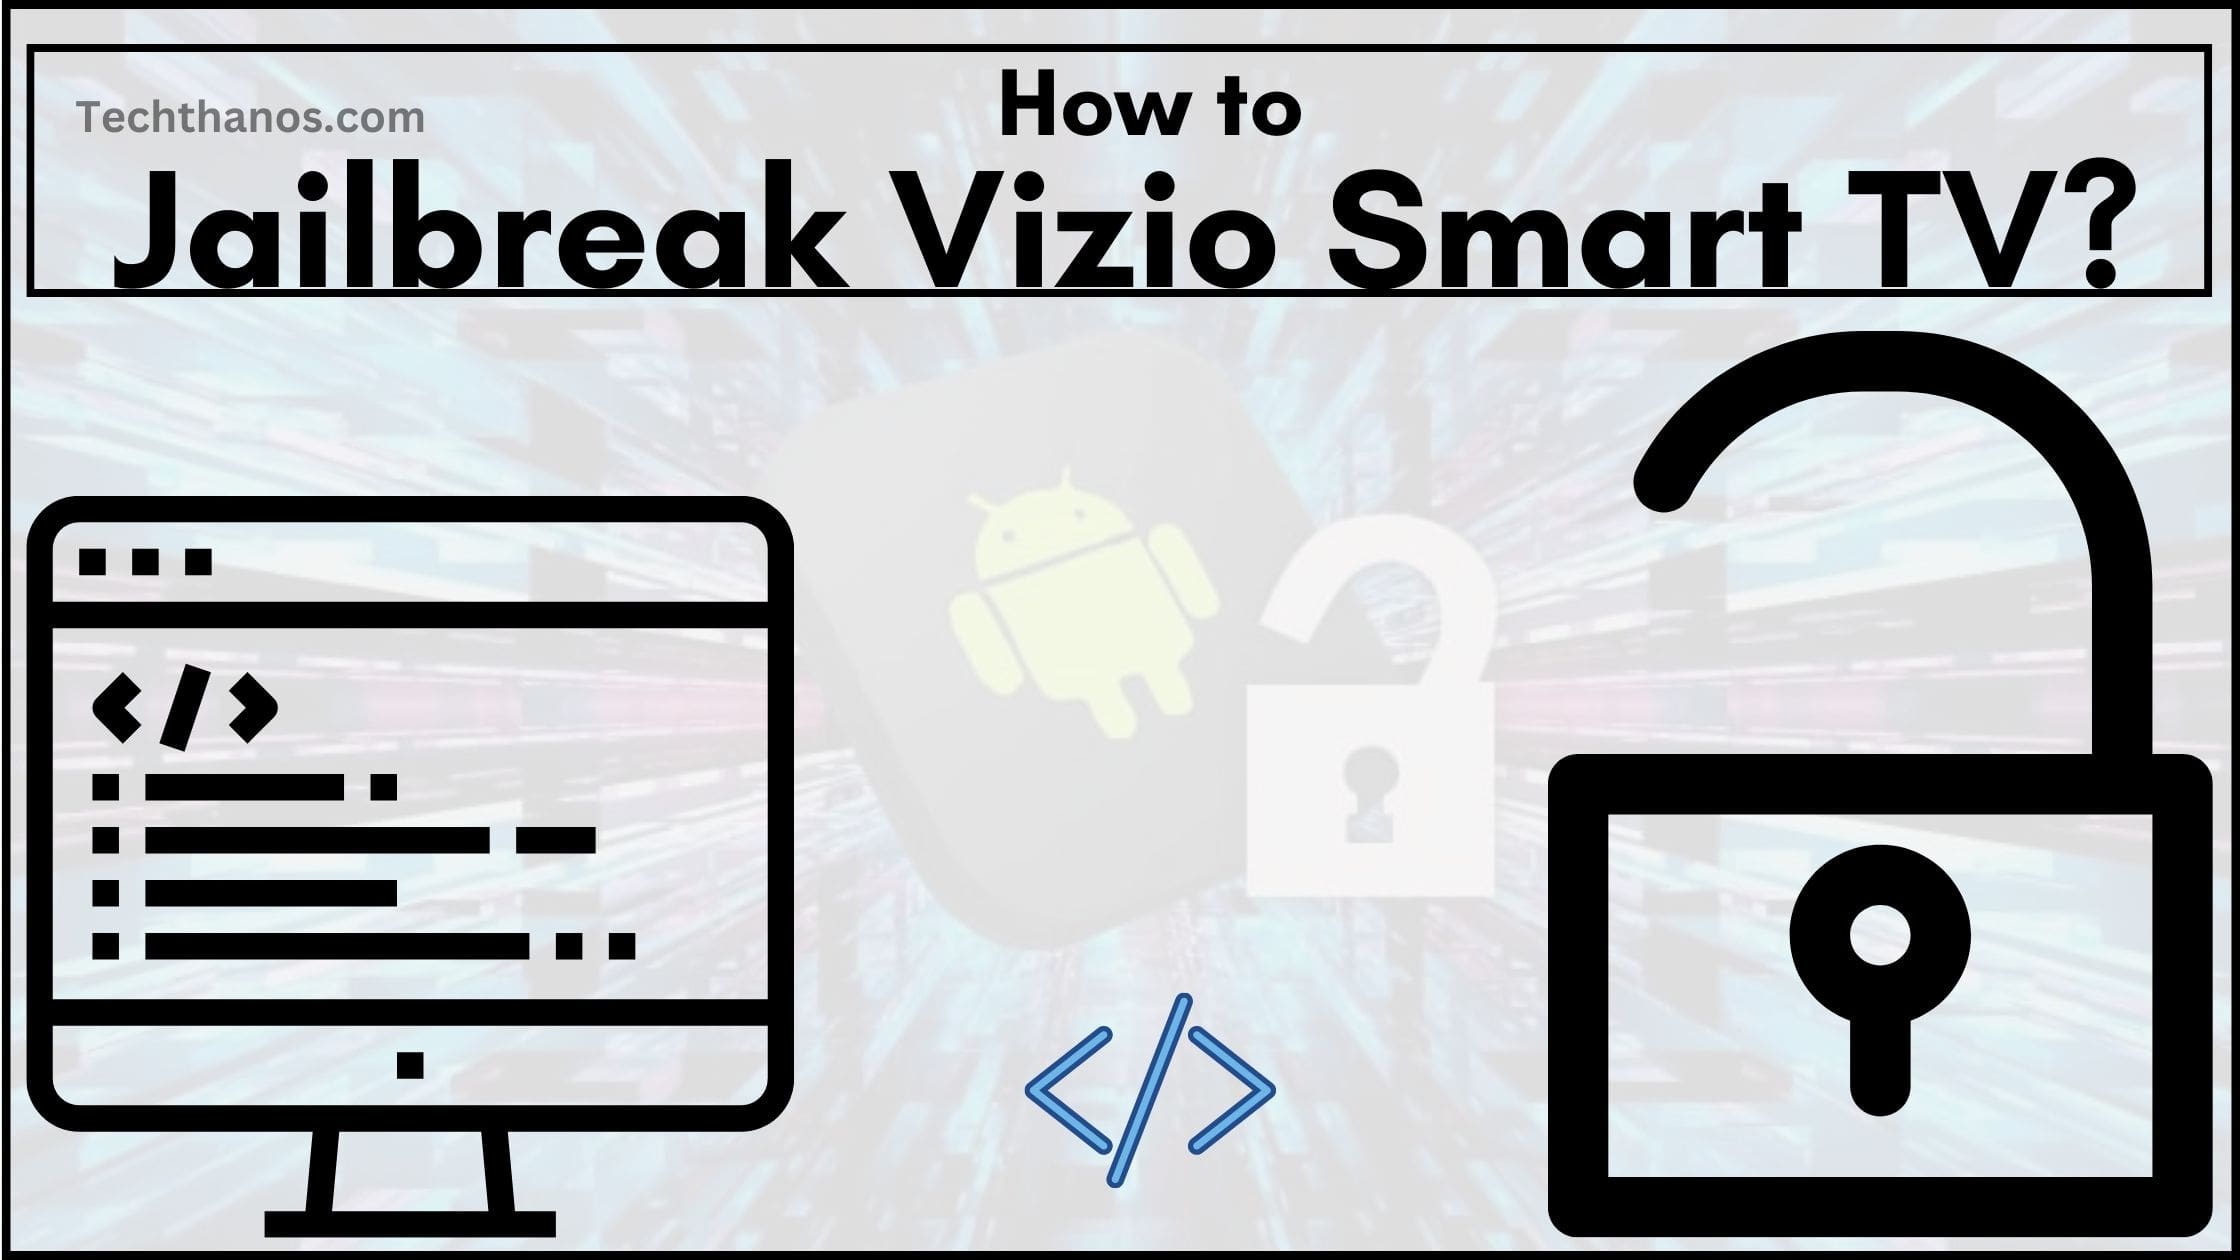 How to Jailbreak Vizio Smart TV?